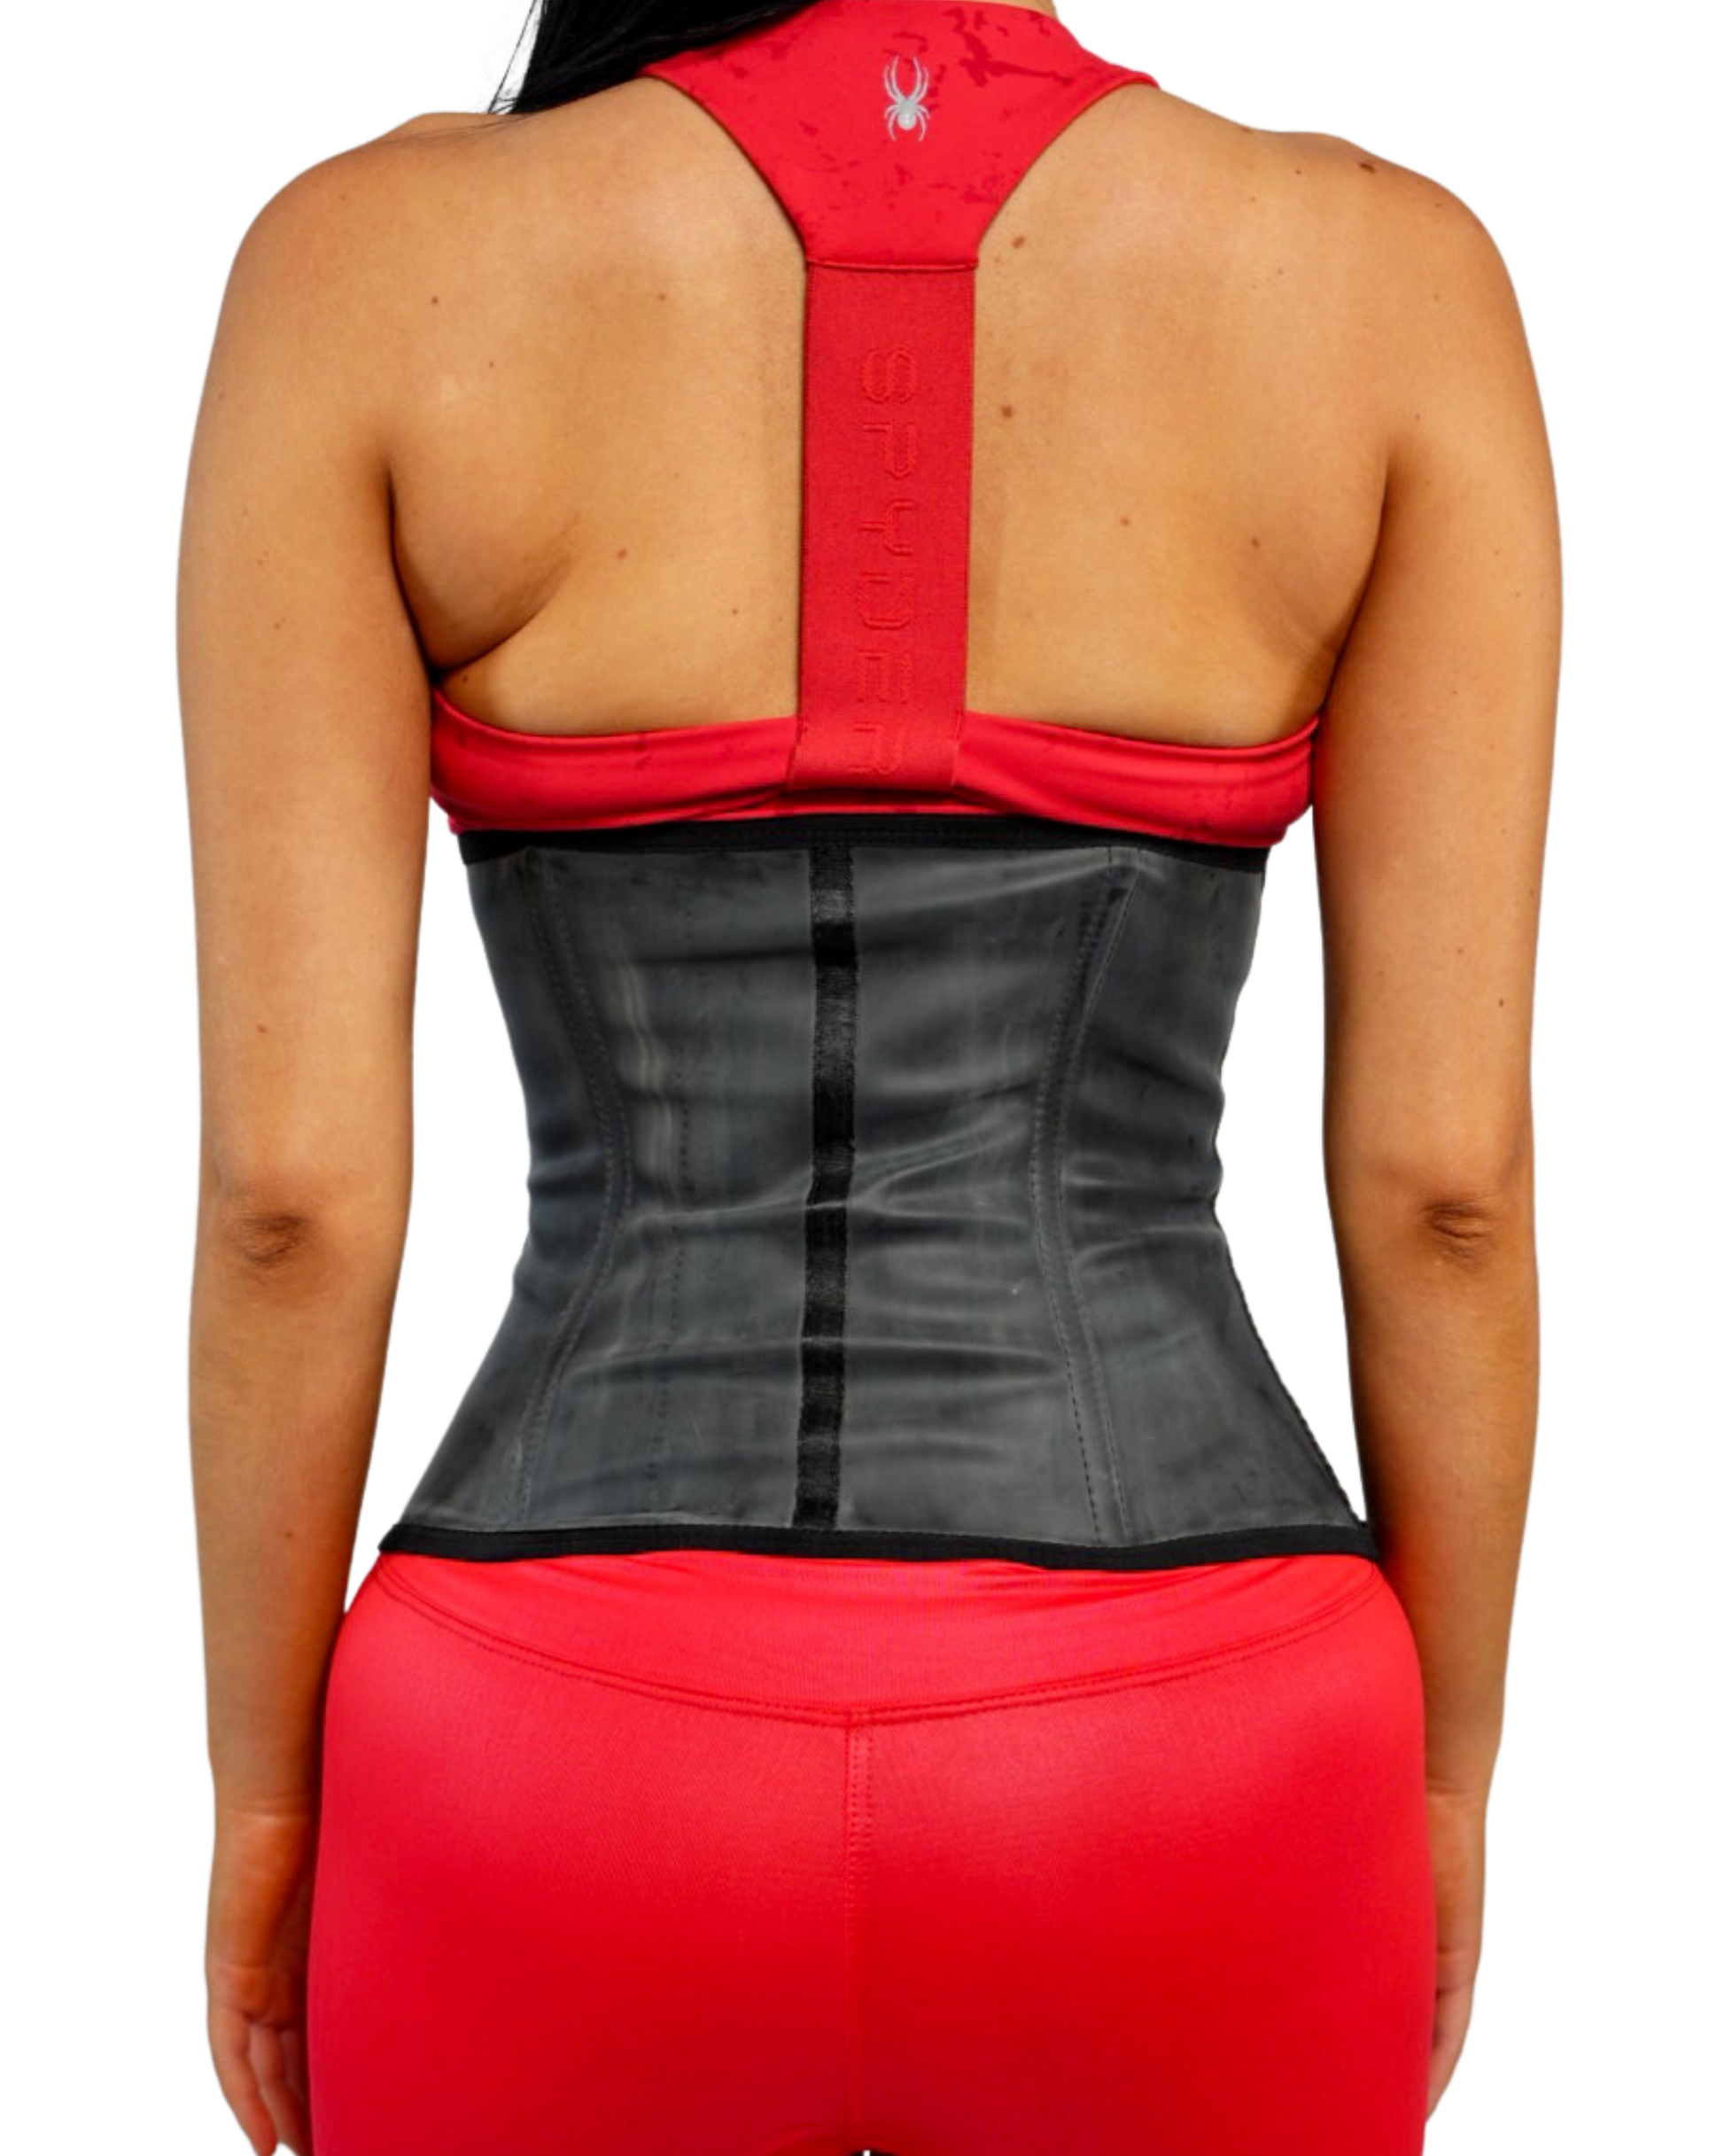 Burvogue Latex Waist Trainer Corset For Women Slimming Body Shaper Fitness  Waist Cinchers Tummy Shapewear Underbust Binders